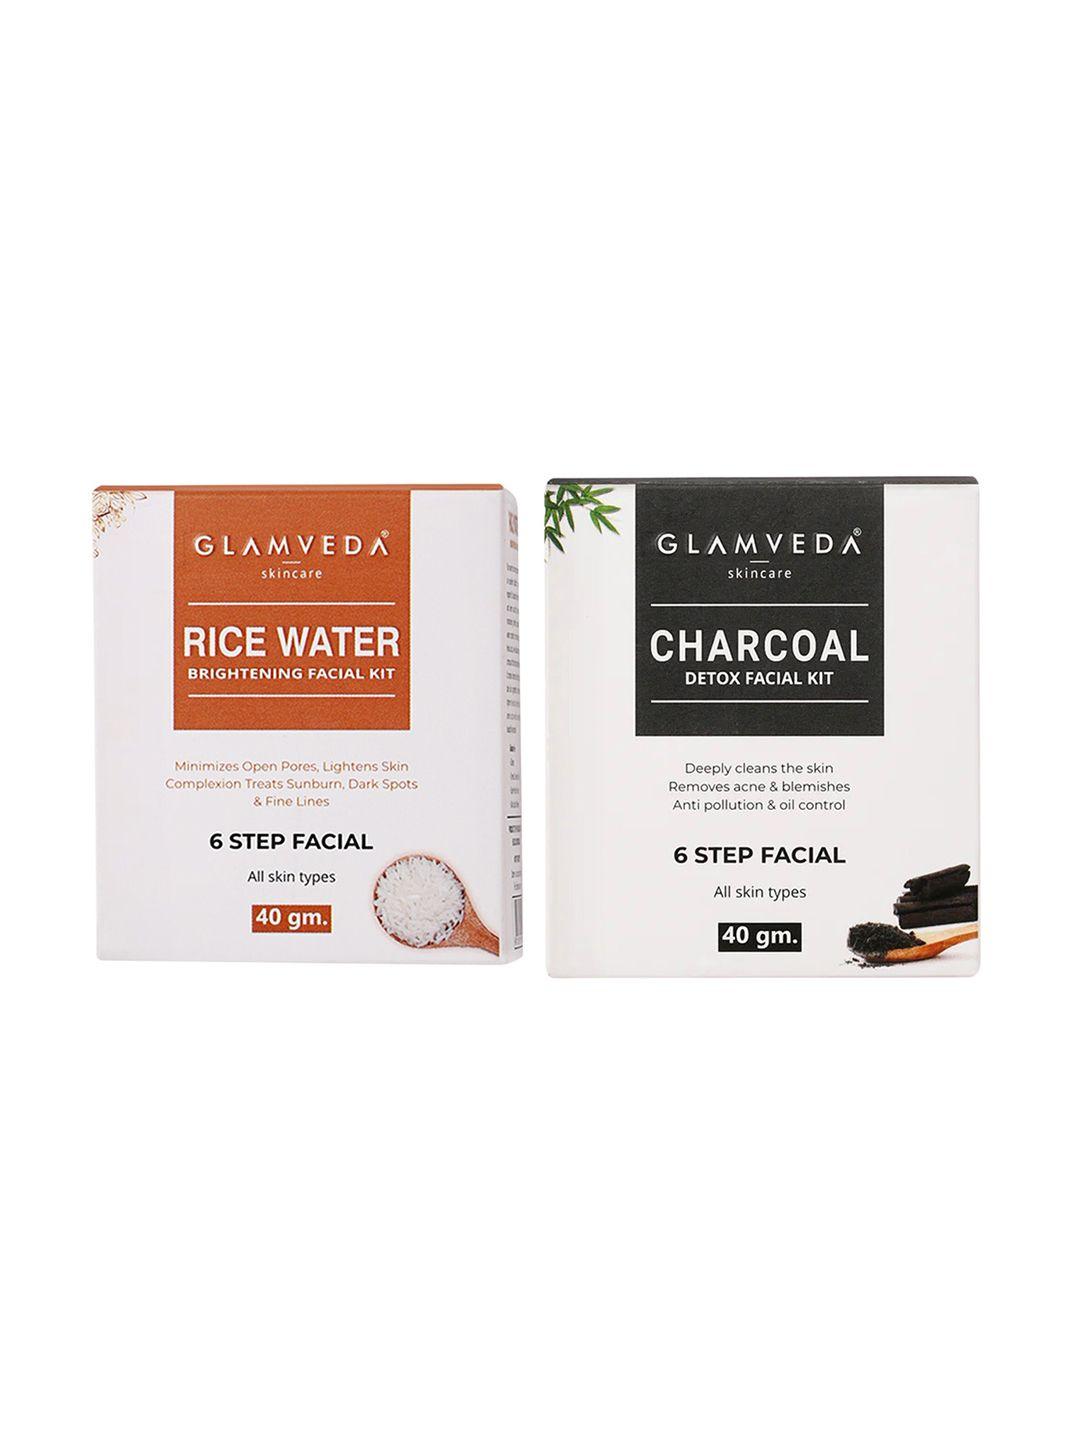 glamveda rice water brightening facial kit & charcoal detox & anti pollution facial kit 40gm each